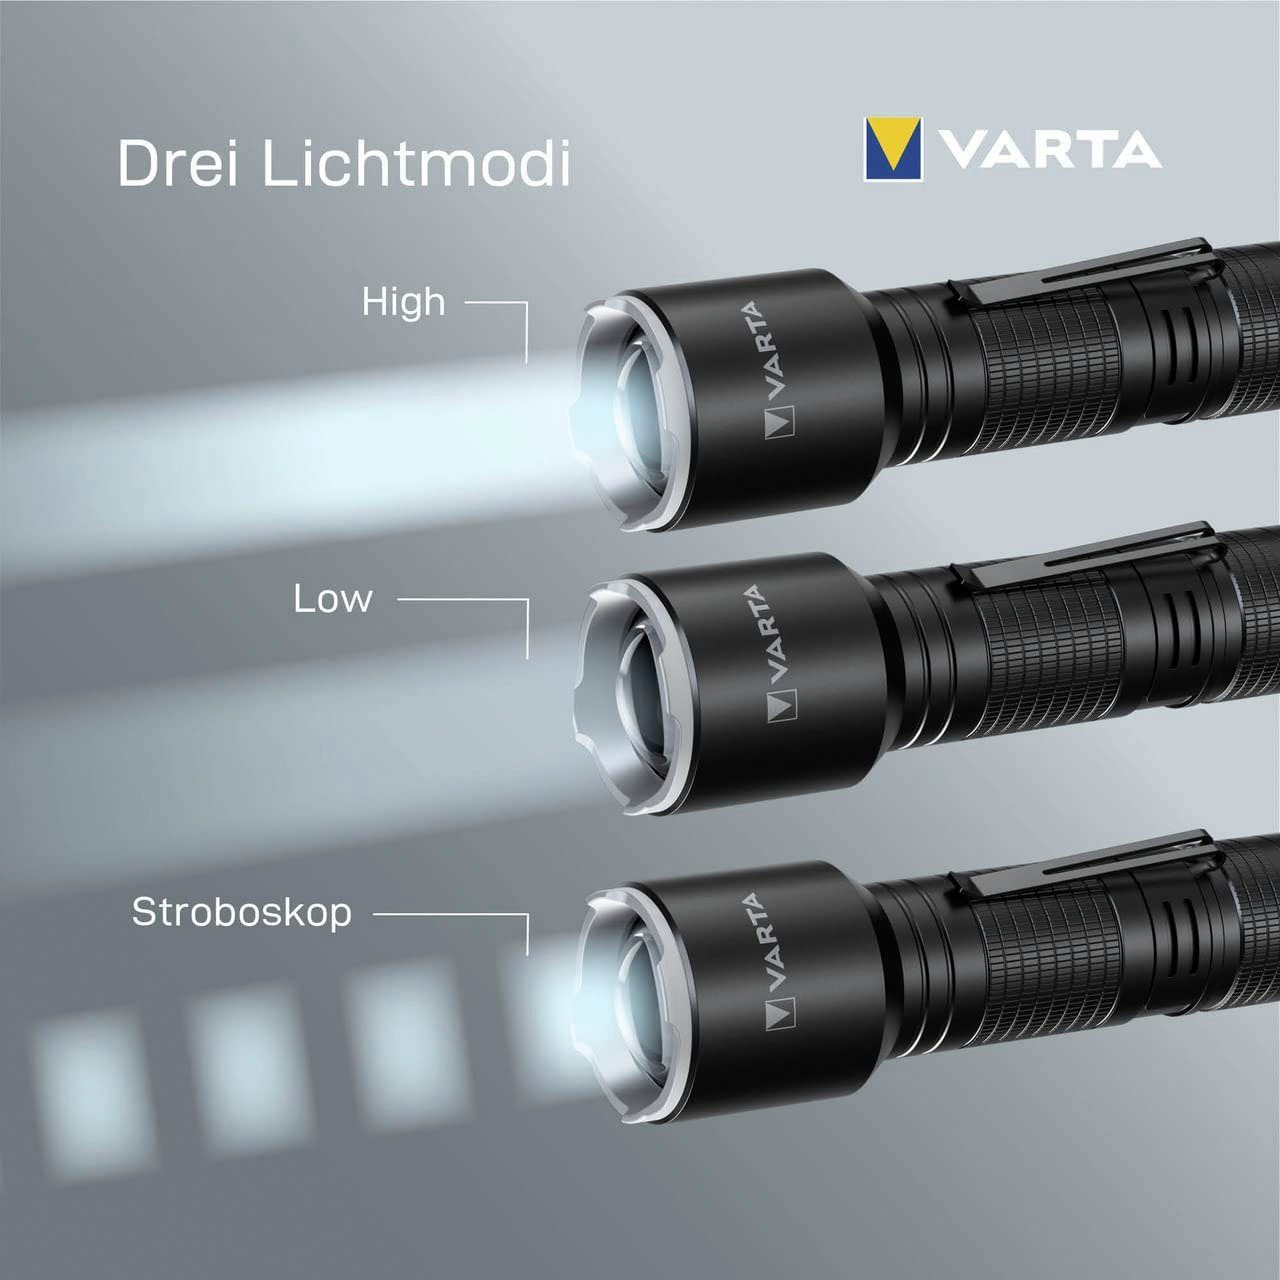 VARTA Taschenlampe Aluminium Light F30 Pro